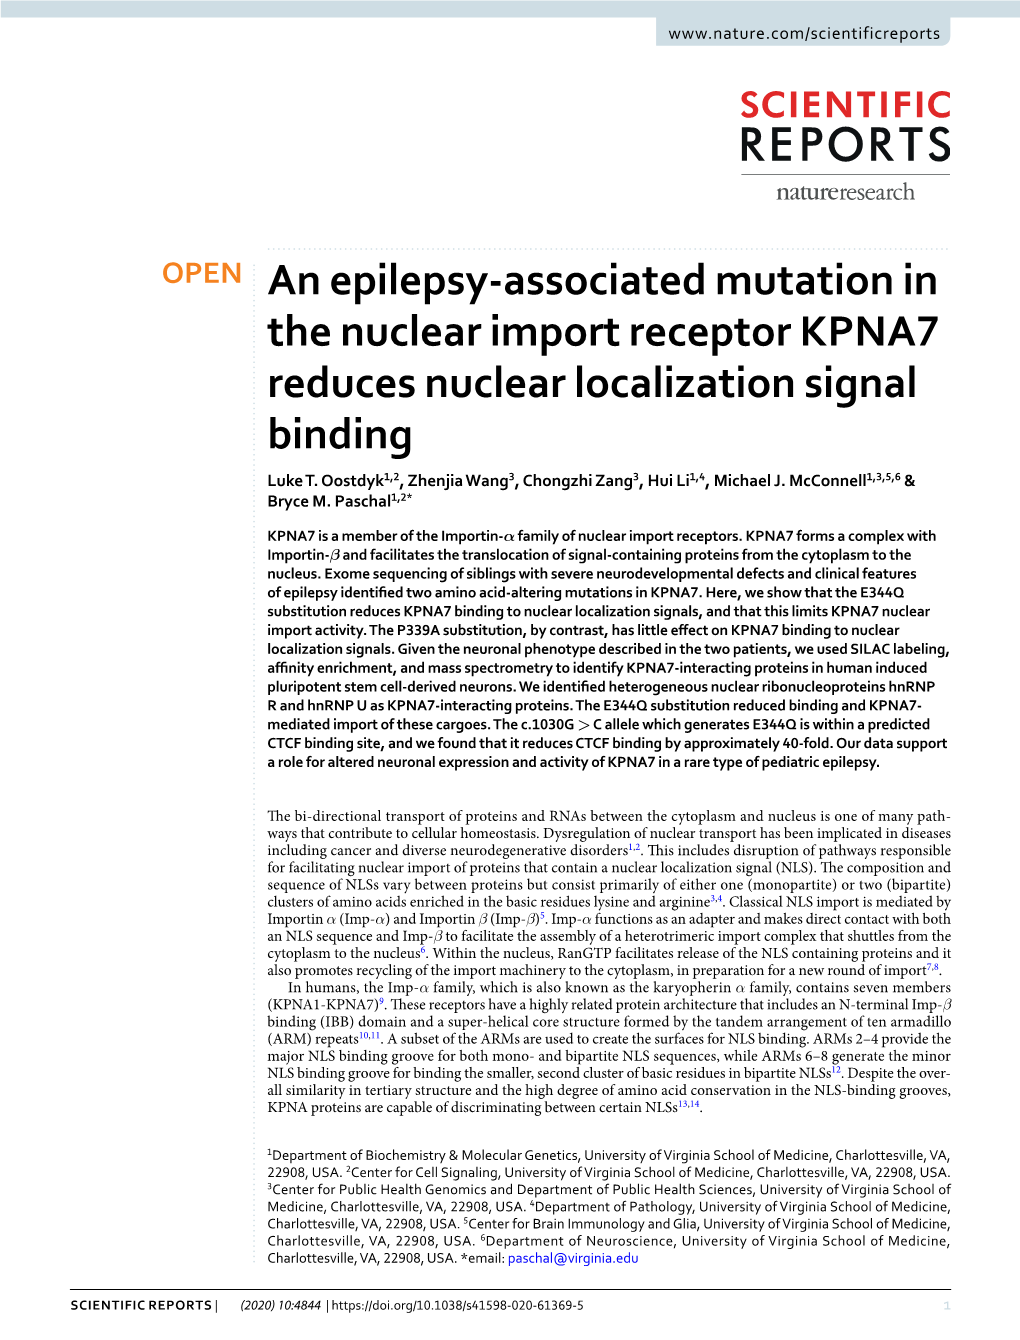 An Epilepsy-Associated Mutation in the Nuclear Import Receptor KPNA7 Reduces Nuclear Localization Signal Binding Luke T